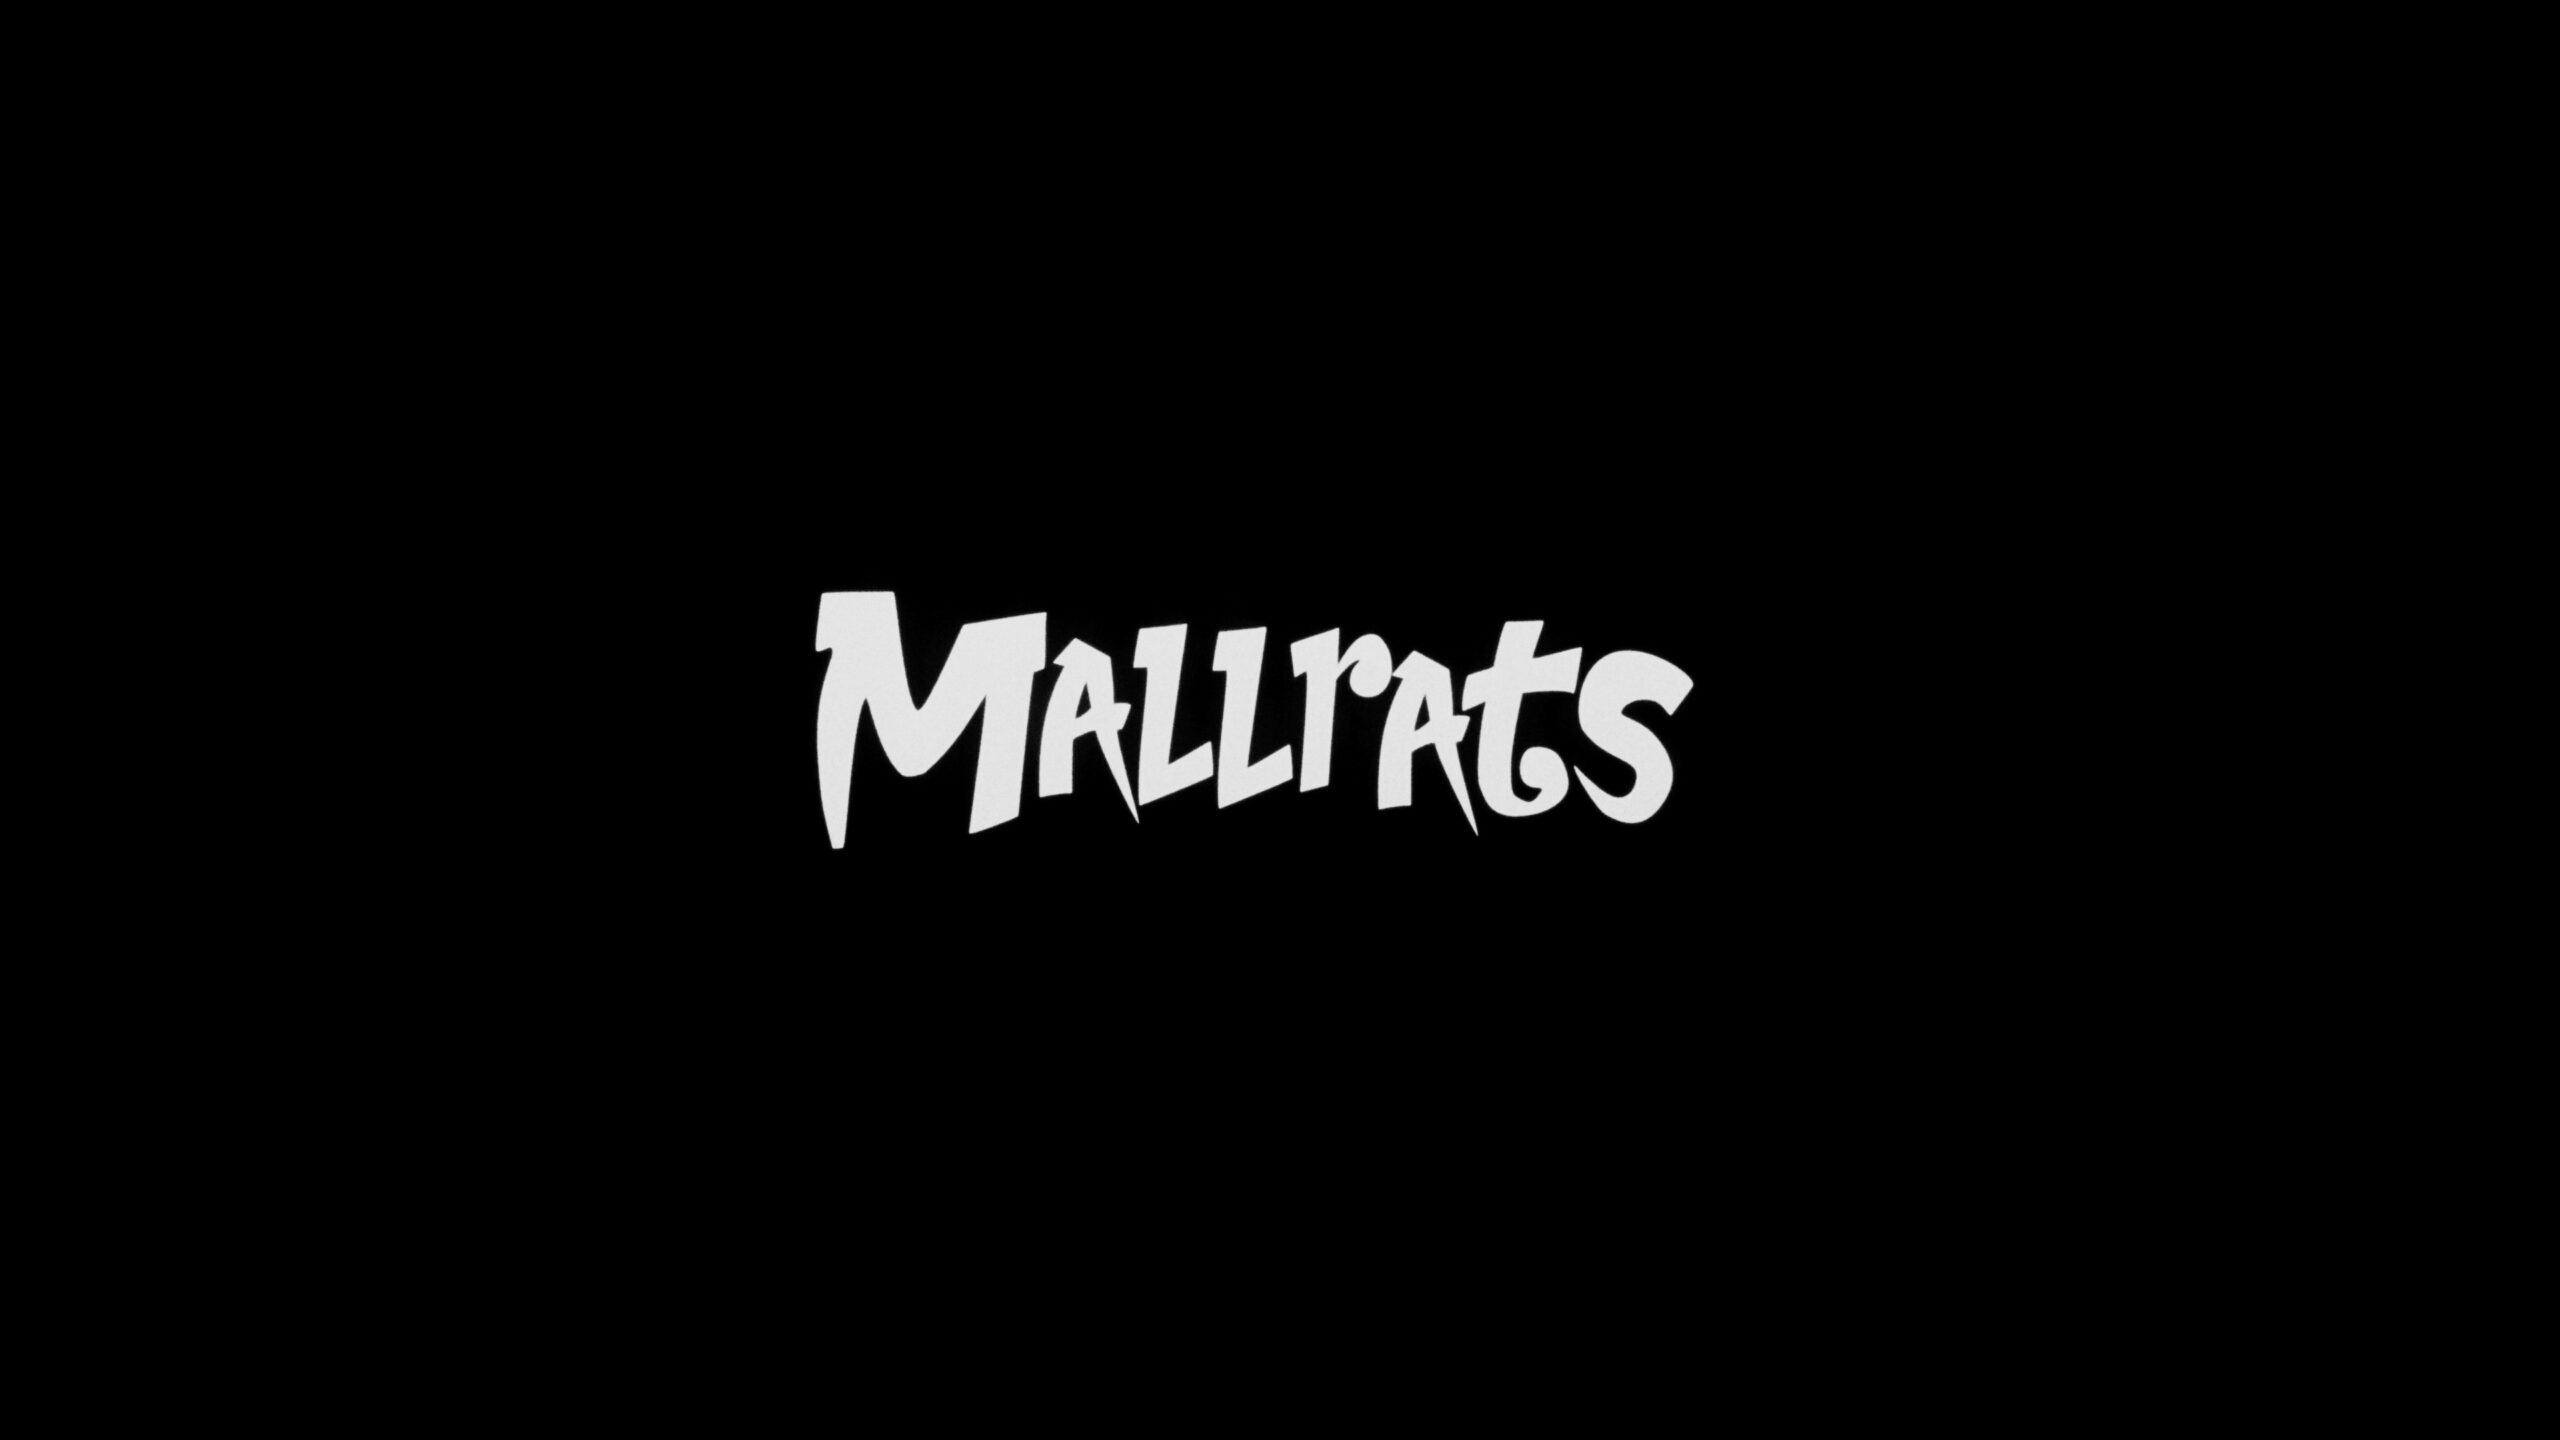 Mallrats (1995) [Arrow 4K UHD review] 22